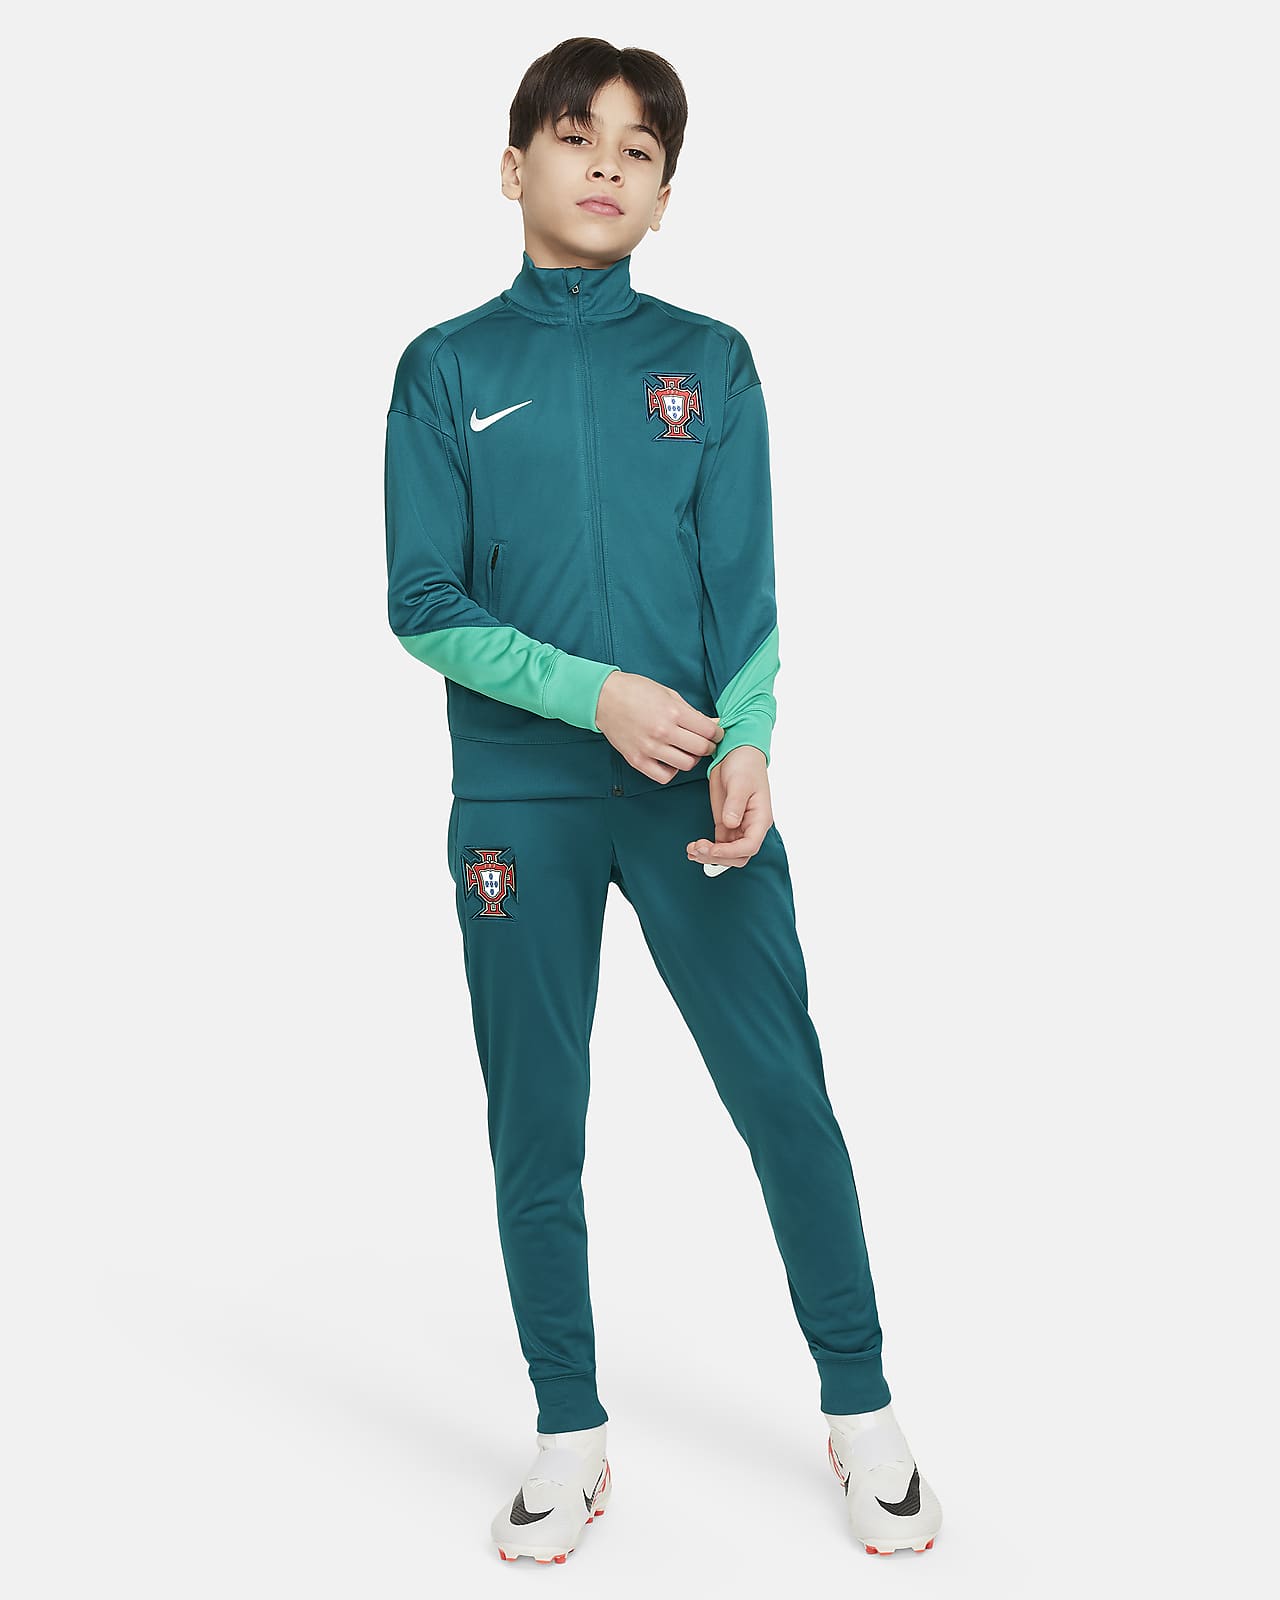 Portugal Strike Nike Dri-FIT Fußball-Trainingsanzug aus Strickmaterial für ältere Kinder